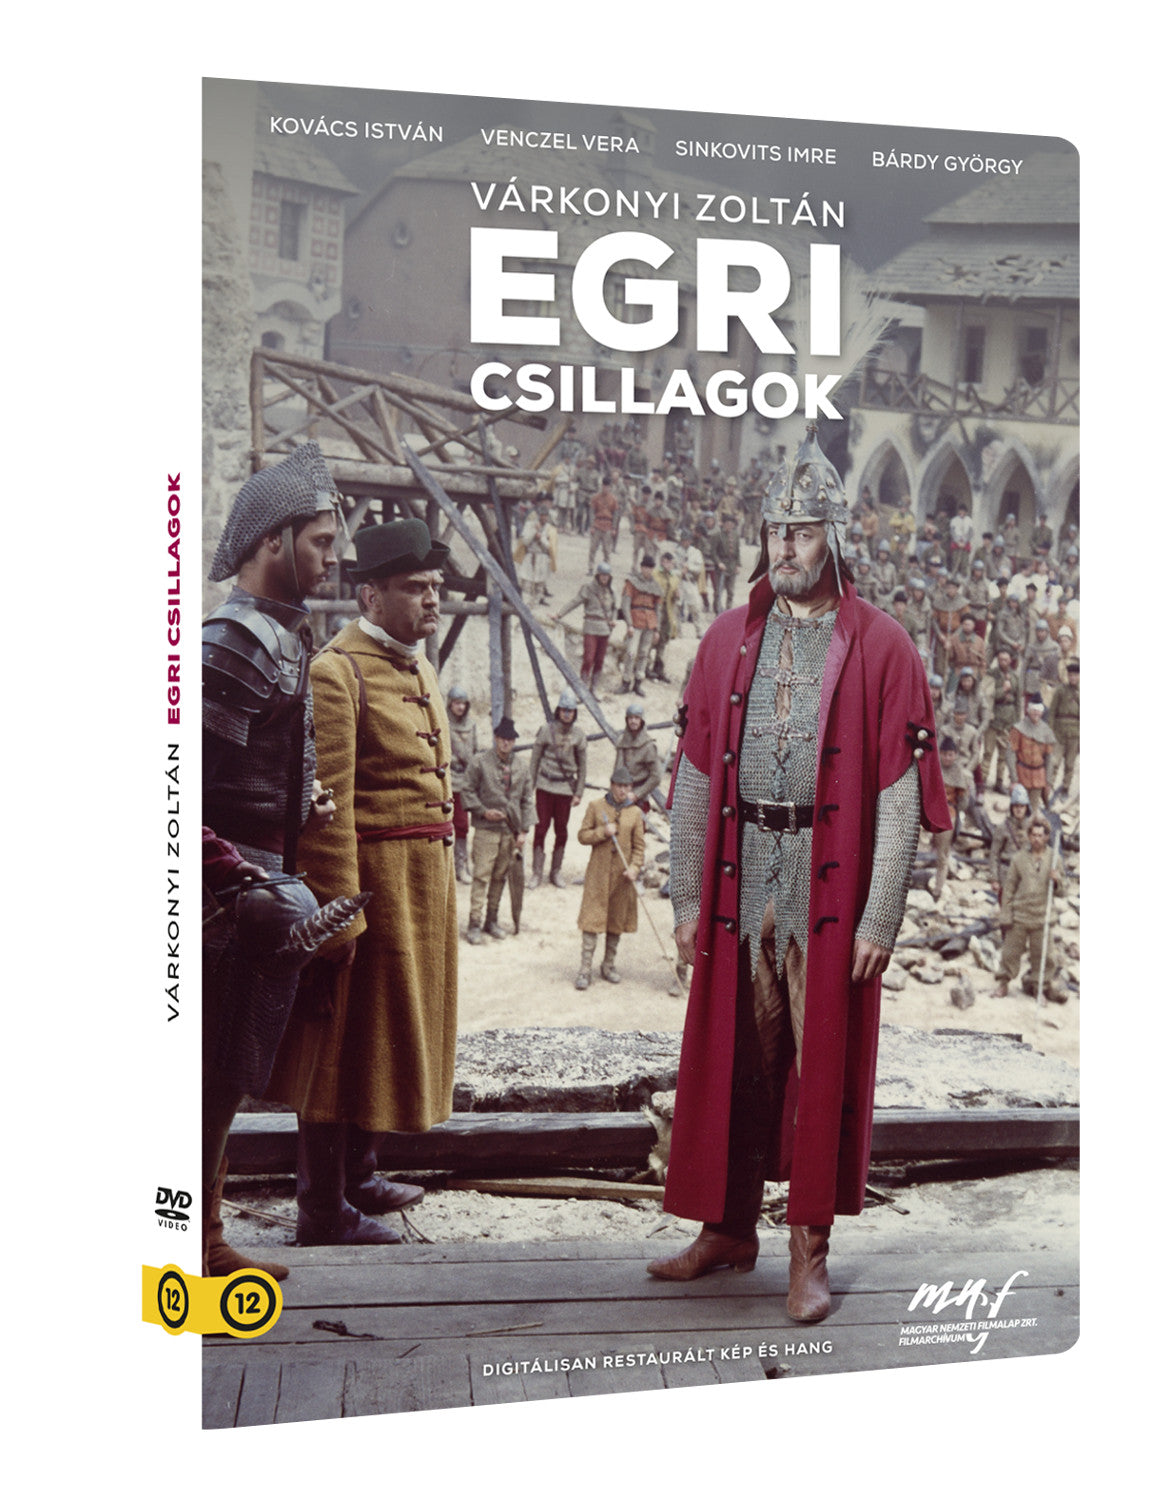 Stars of Eger / Egri csillagok DVD